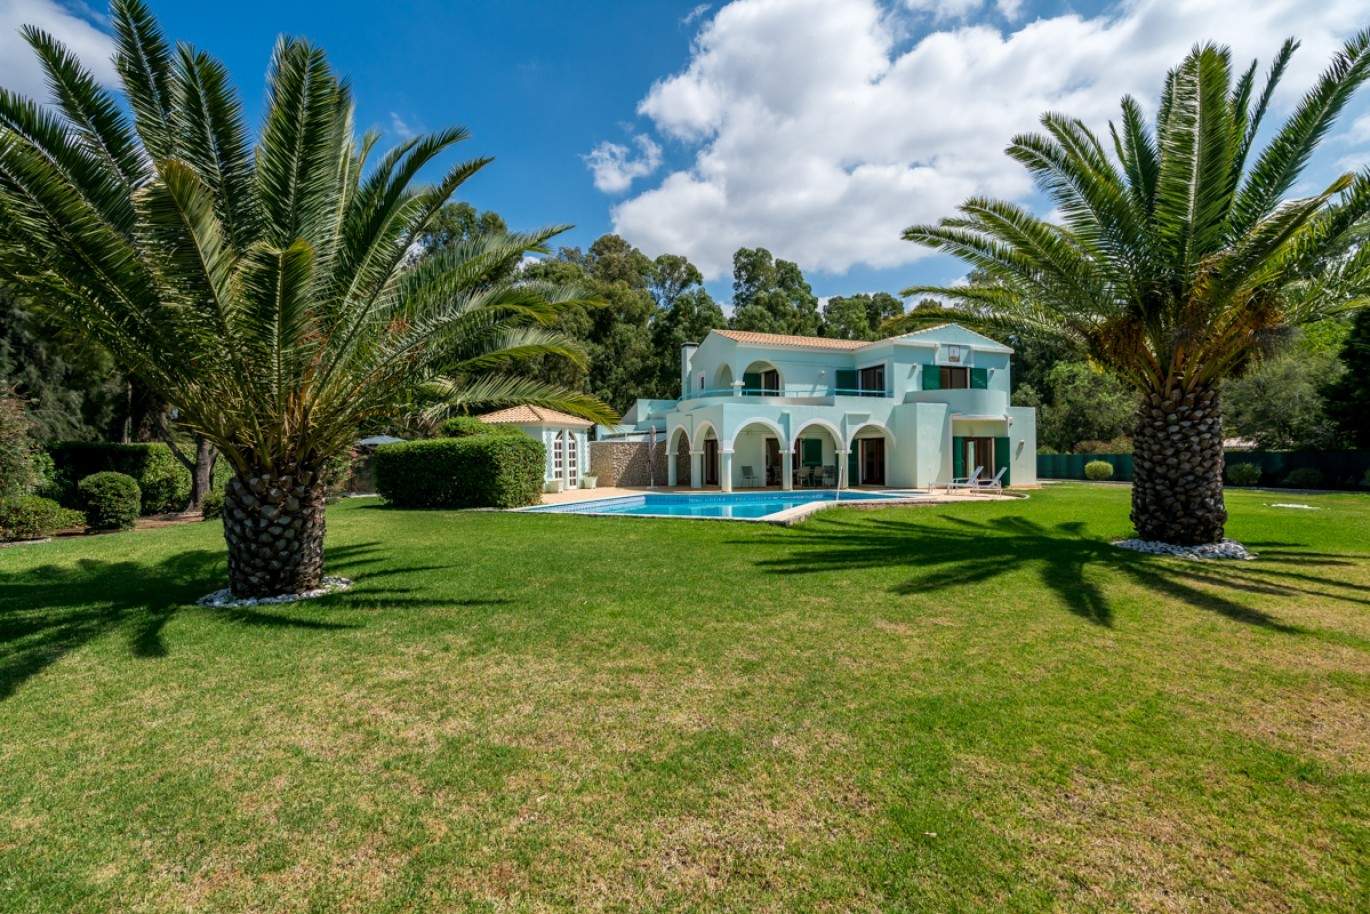 Sale of villa with garden and pool in Penina, Alvor, Algarve, Portugal_83416